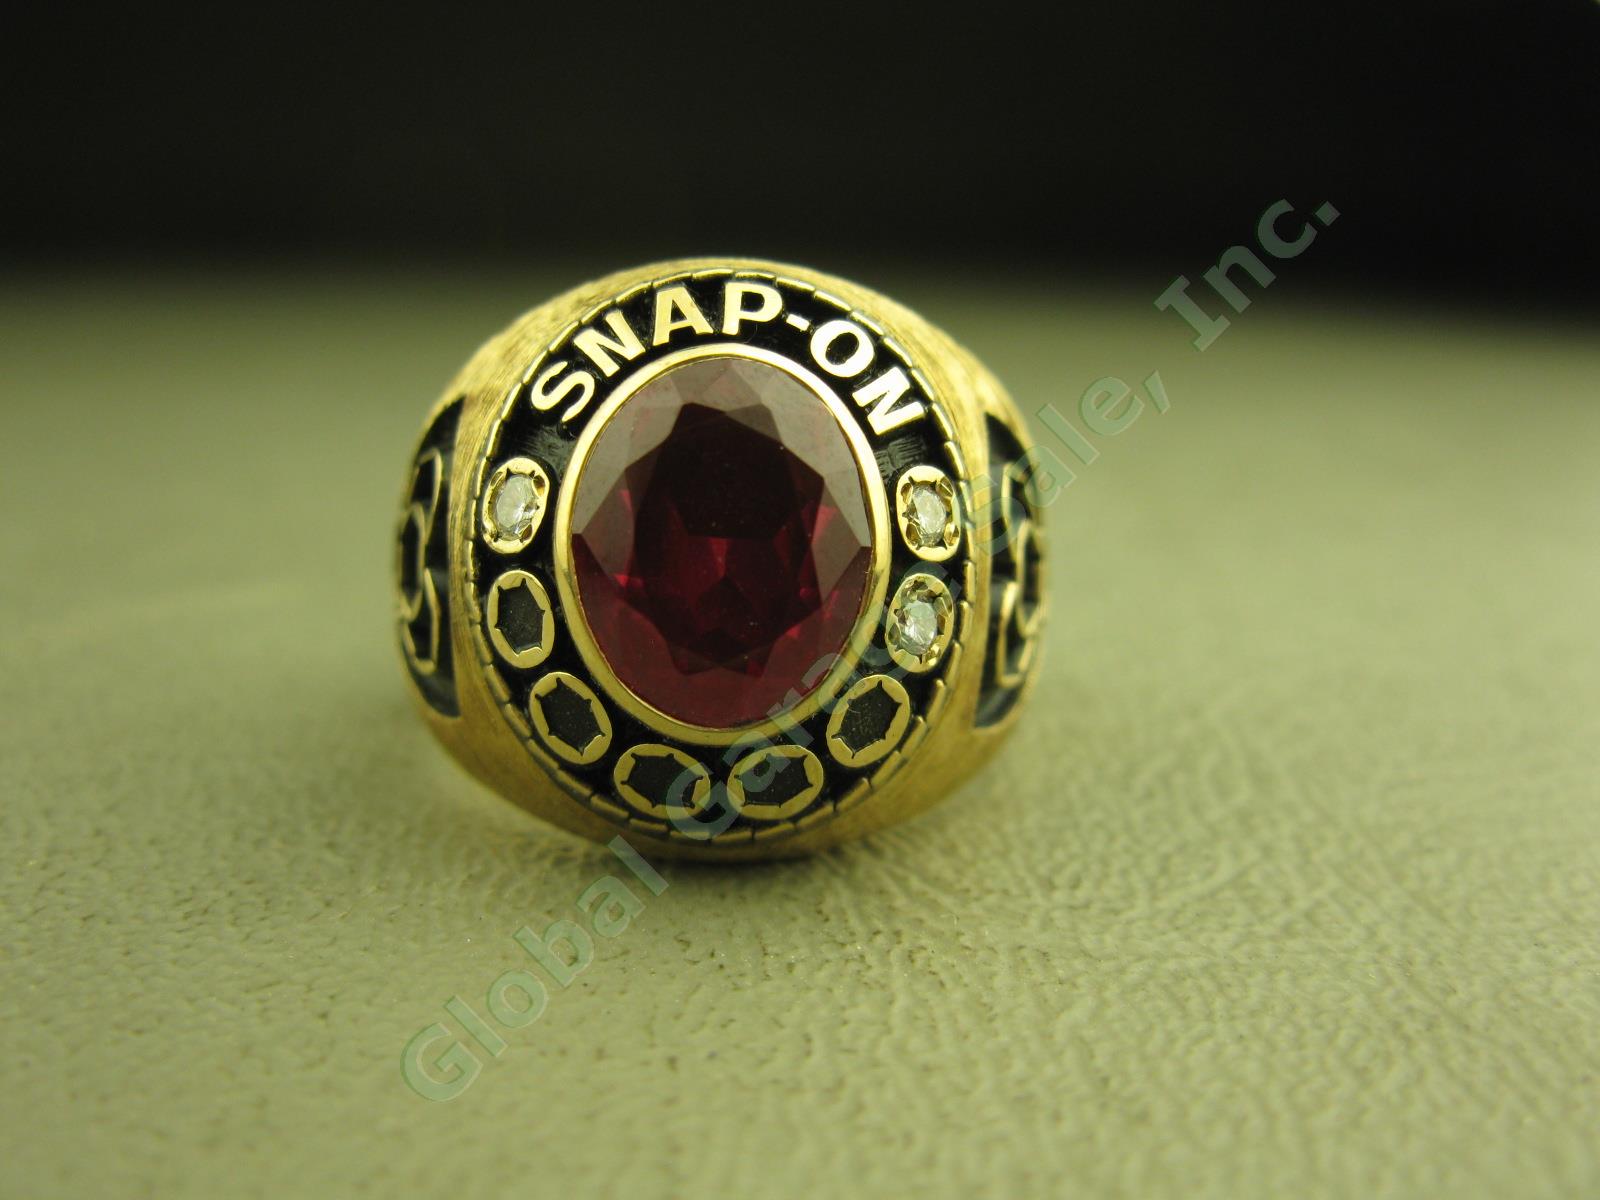 Snap-On Tools Dealer Sales Award 10K Gold Ring W/3 Diamonds 20.5 Gram Size 10.75